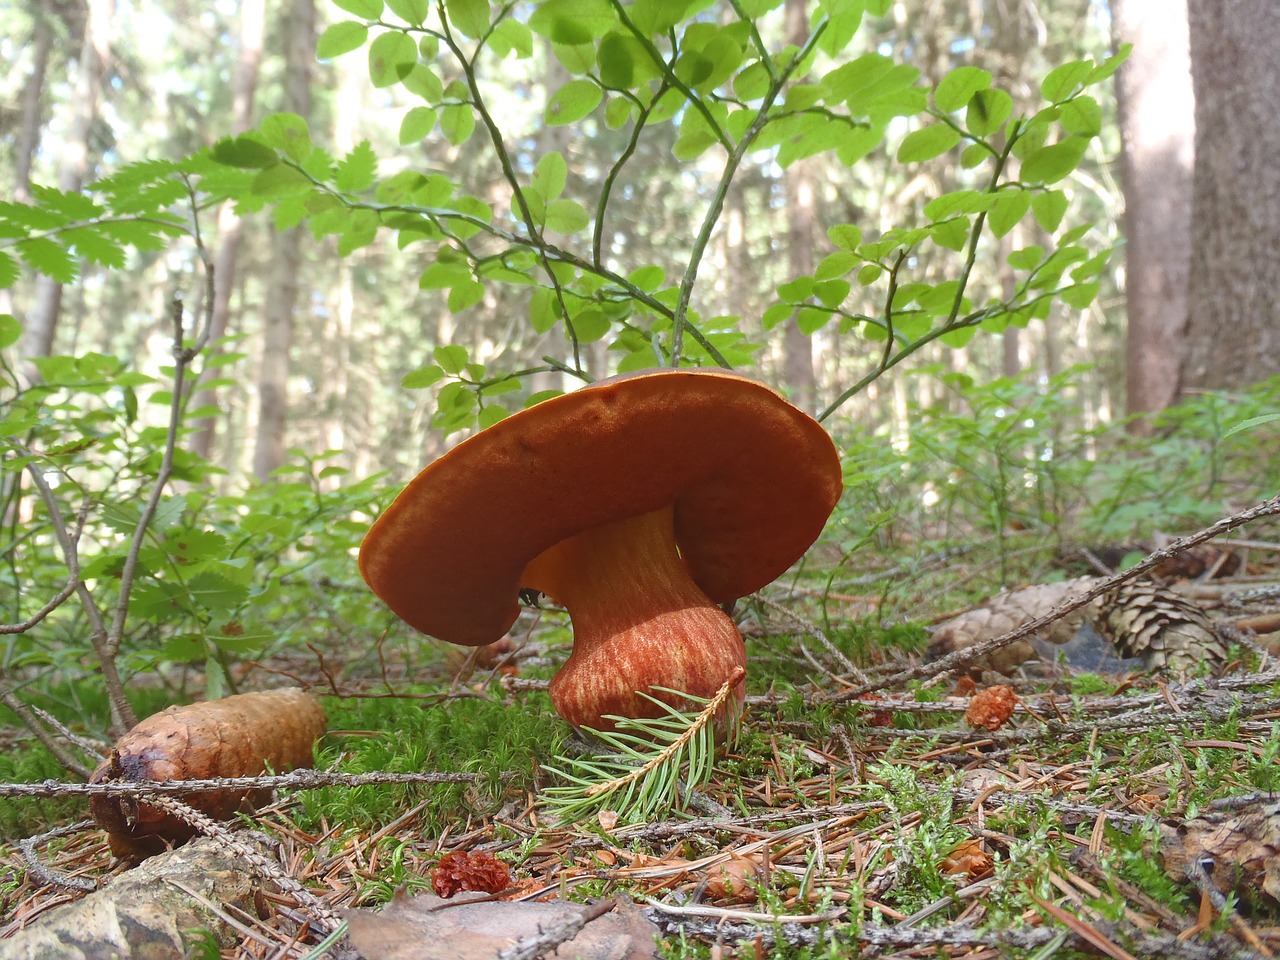 fungus boletus mushroom picking free photo